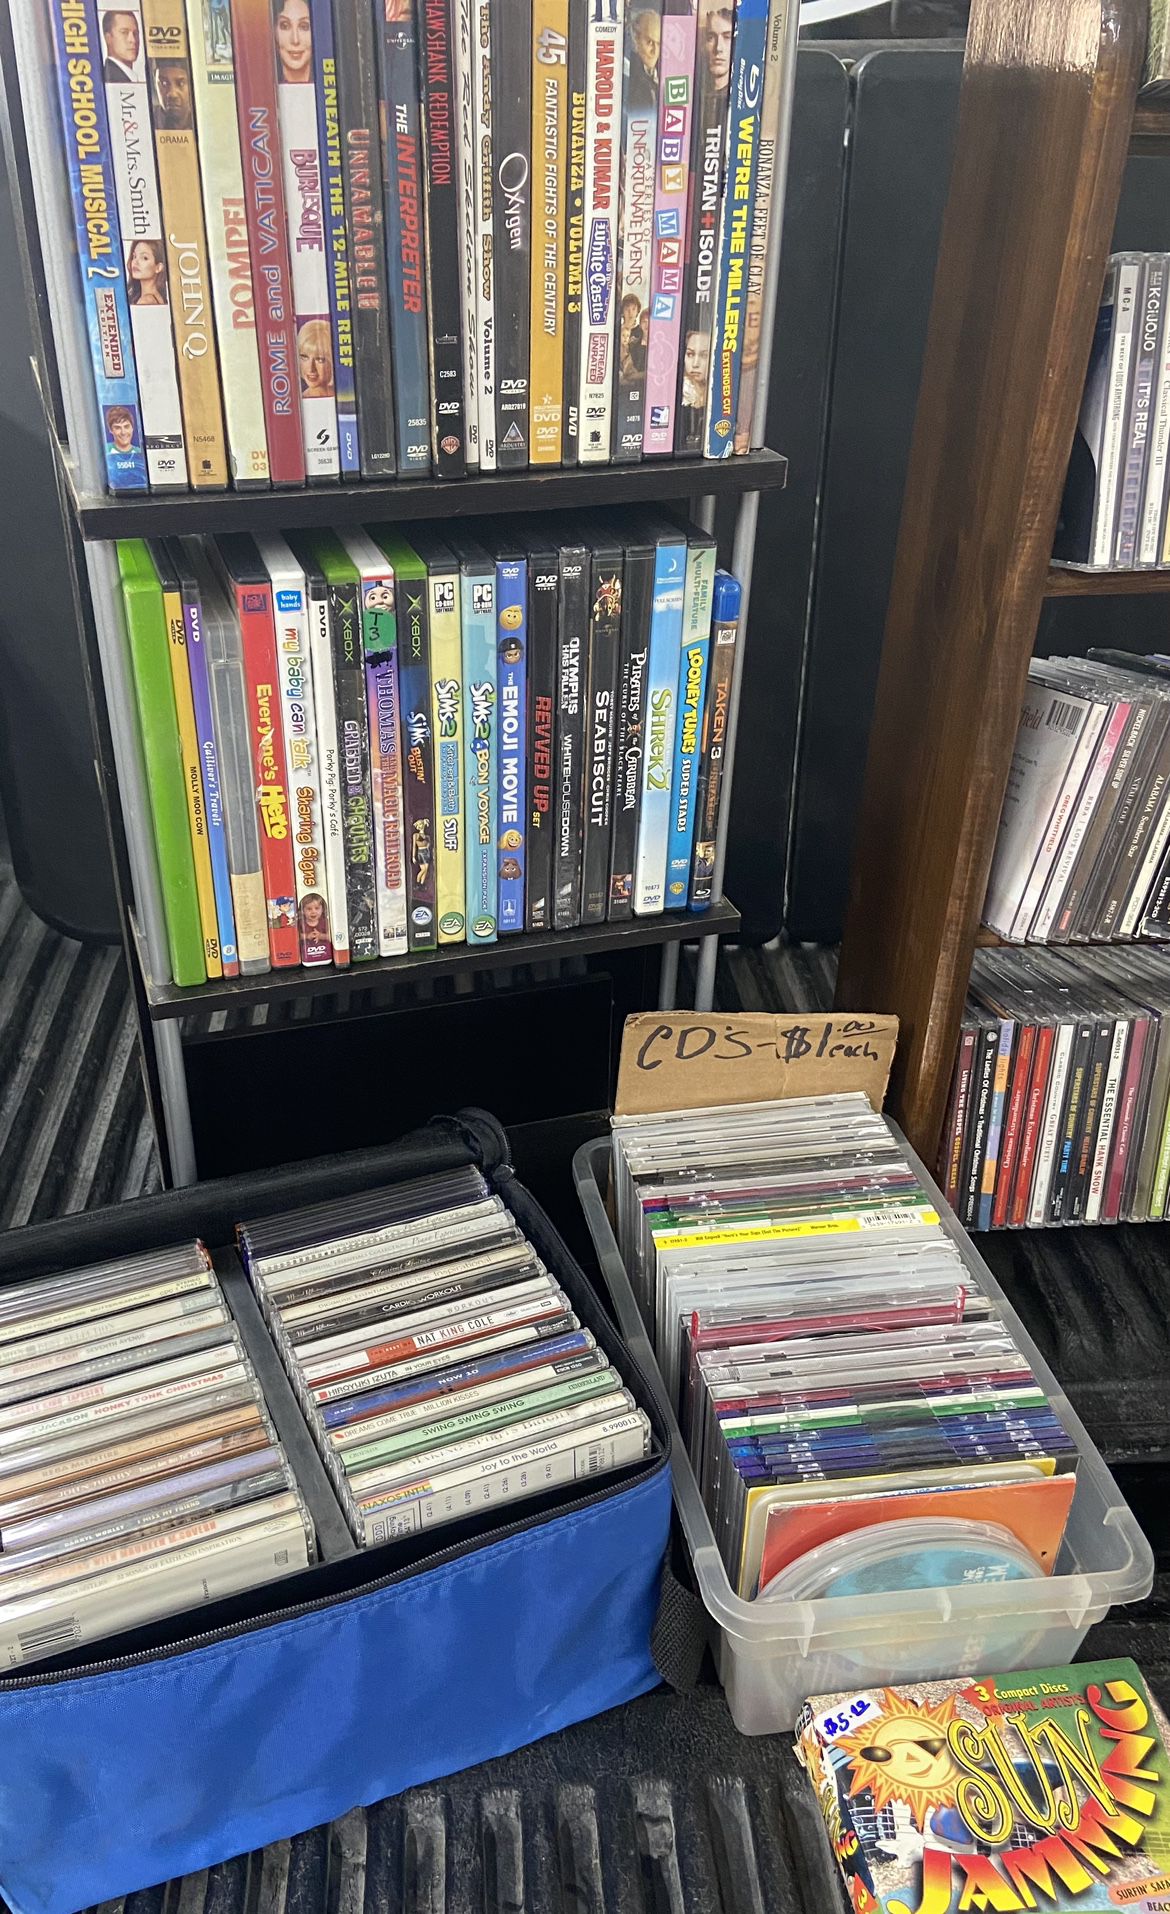 DVDs / CDs for sale…Loads